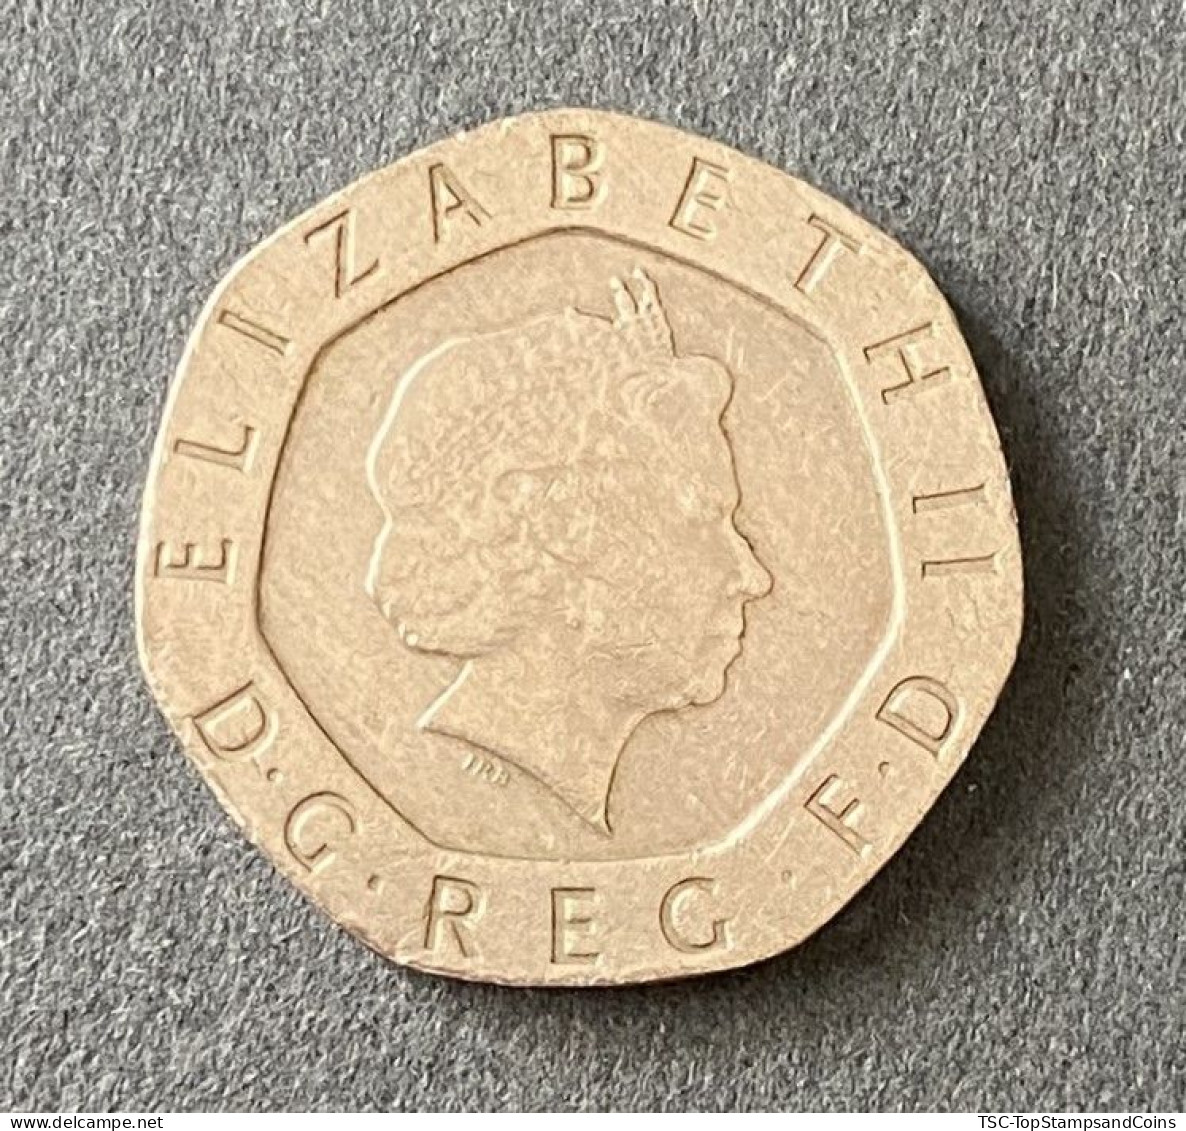 $$GB800 - Queen Elizabeth II - 4th Portrait - Tudor Rose - 20 Pence Coin - Great-Britain - 2001 - 20 Pence